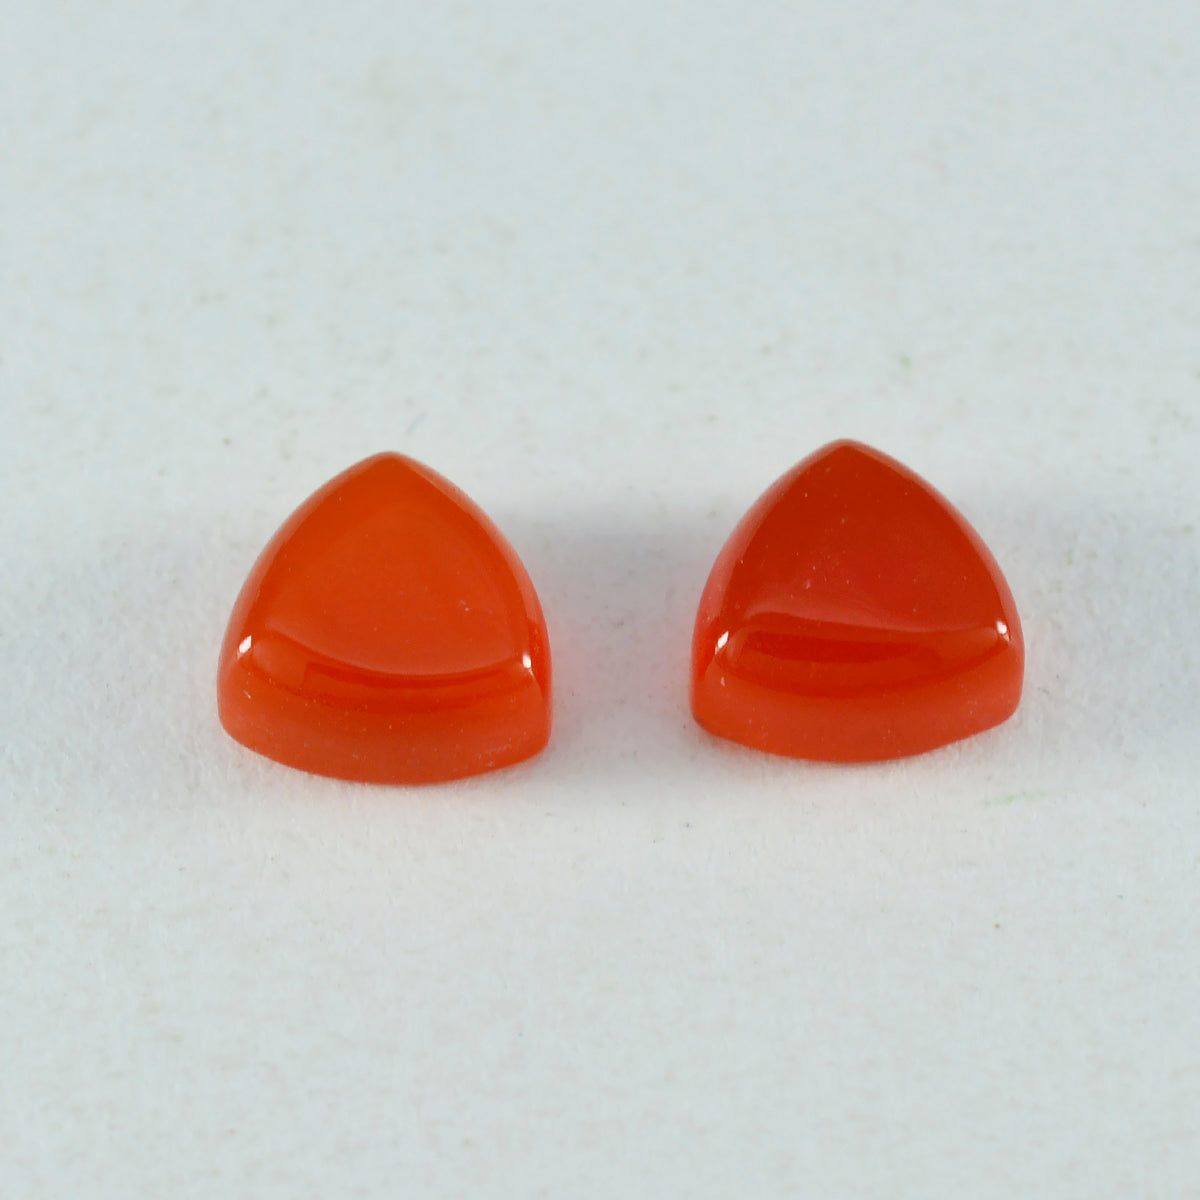 Riyogems 1PC Red Onyx Cabochon 12x12 mm Trillion Shape startling Quality Loose Stone